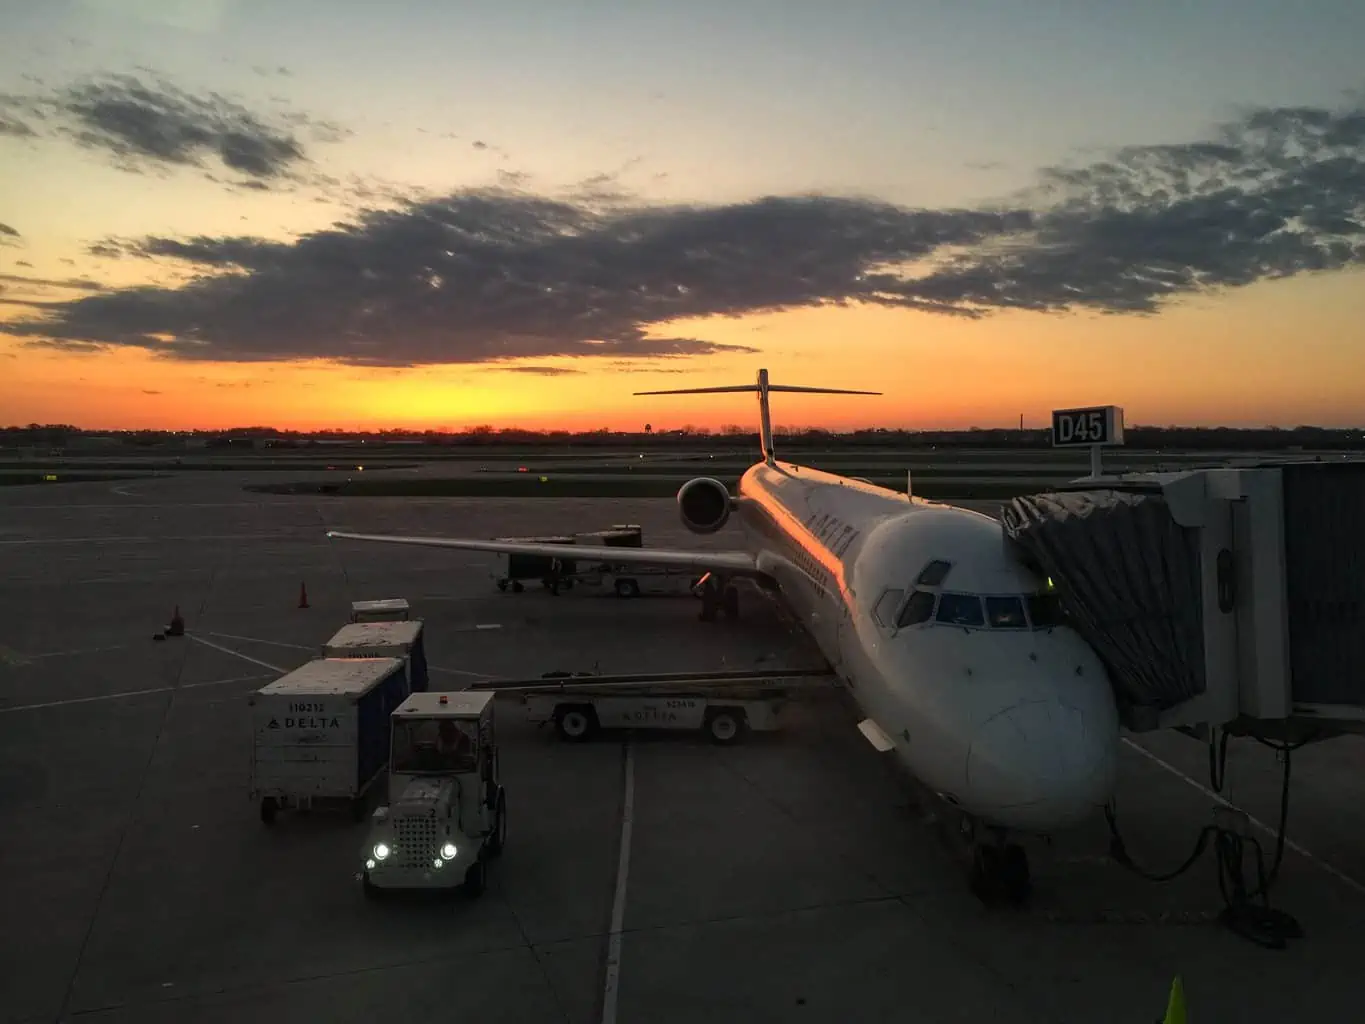 Airplane Sunrise